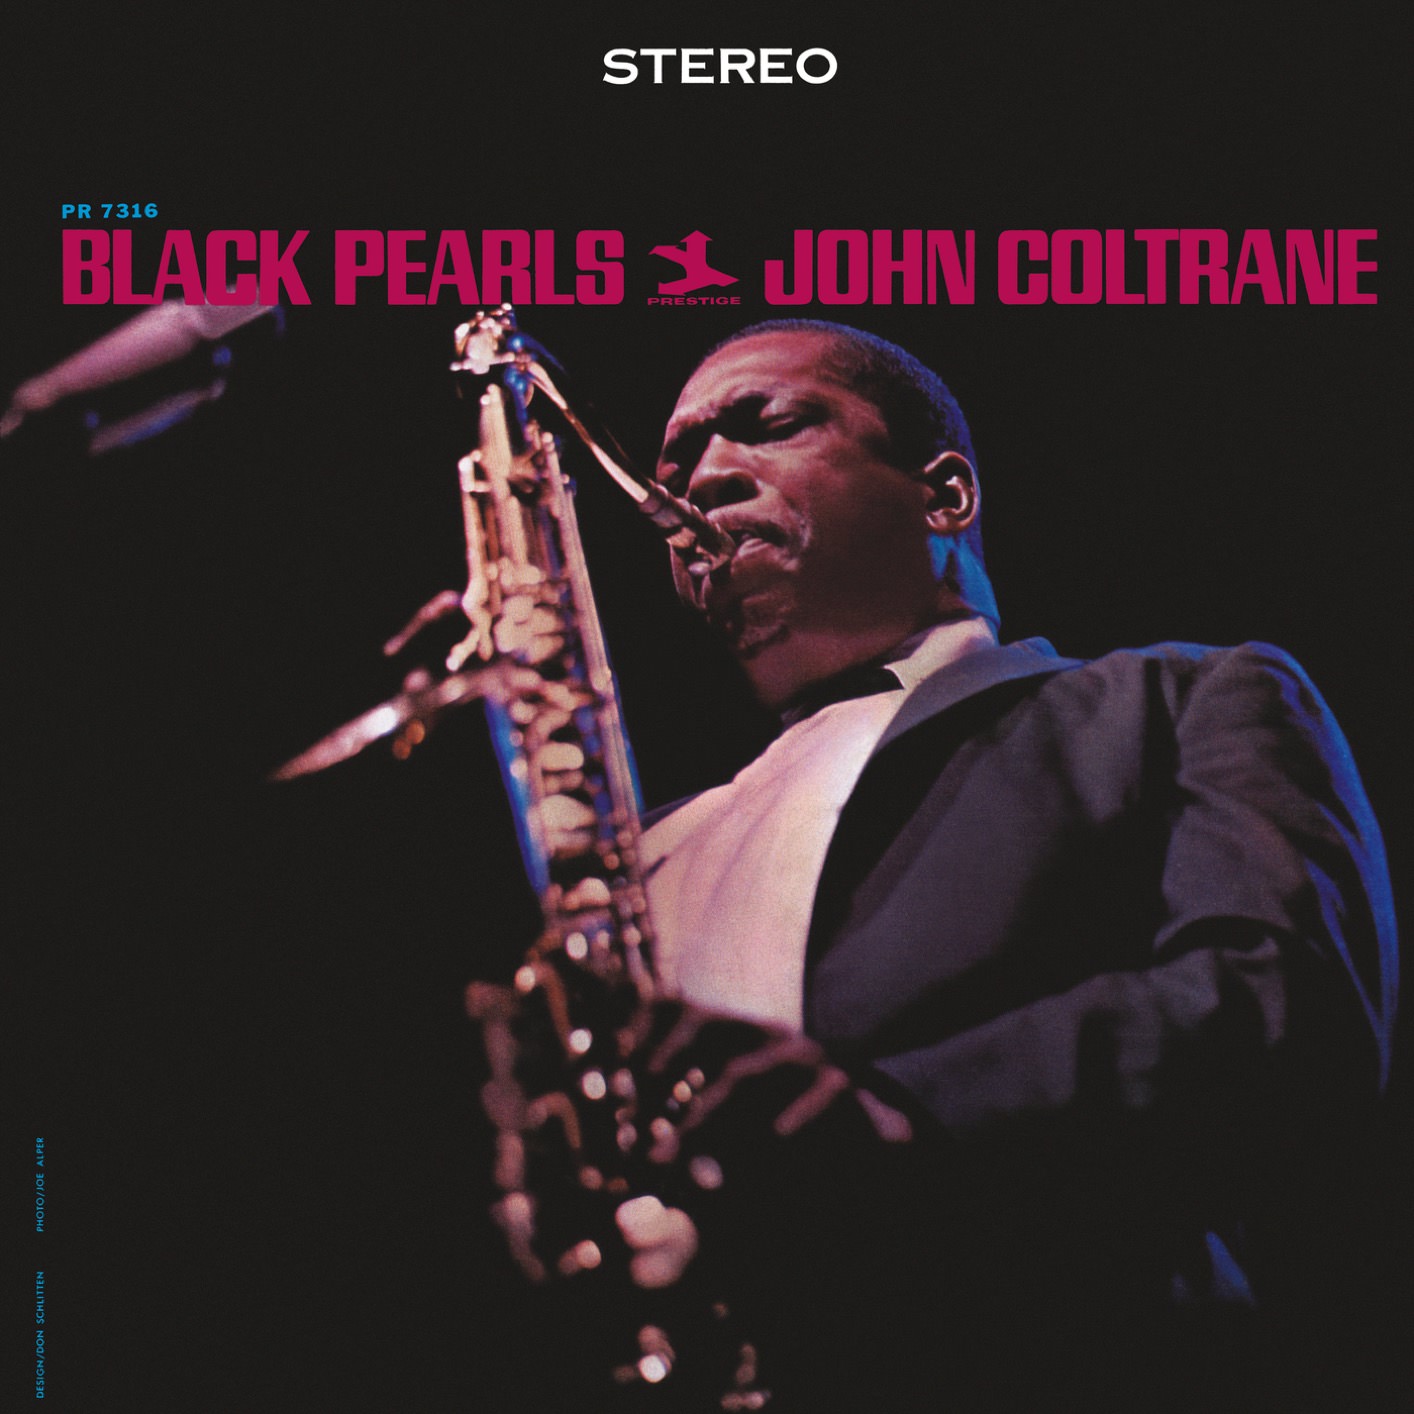 John Coltrane - Black Pearls (1964/2016) [HDTracks FLAC 24bit/96kHz]